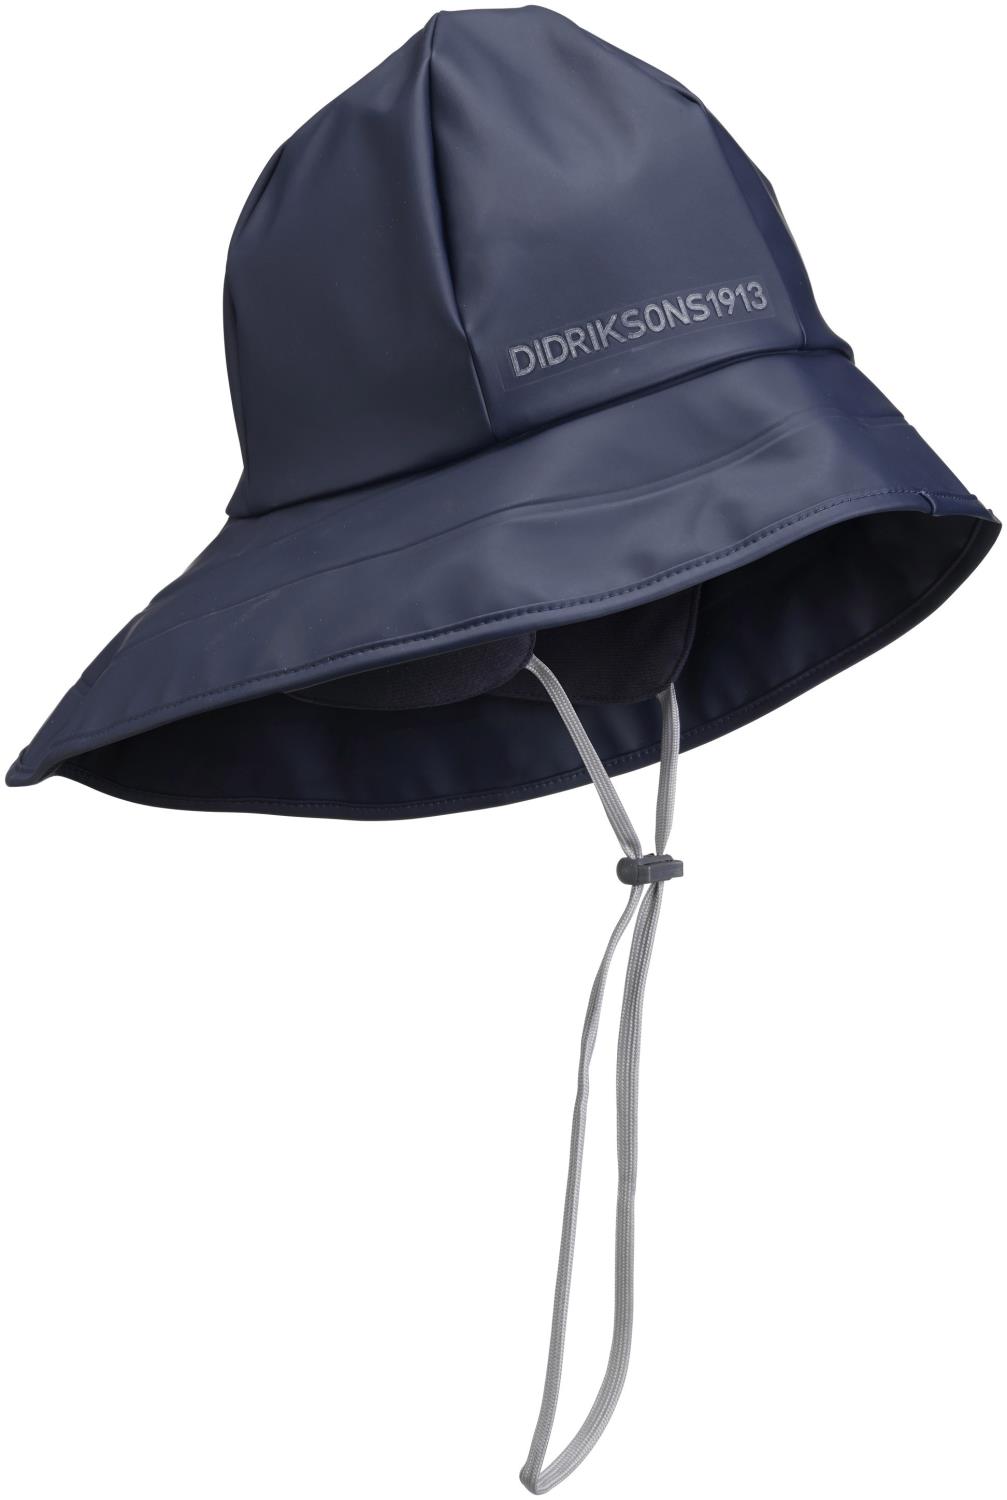 Didriksons Southwest hat